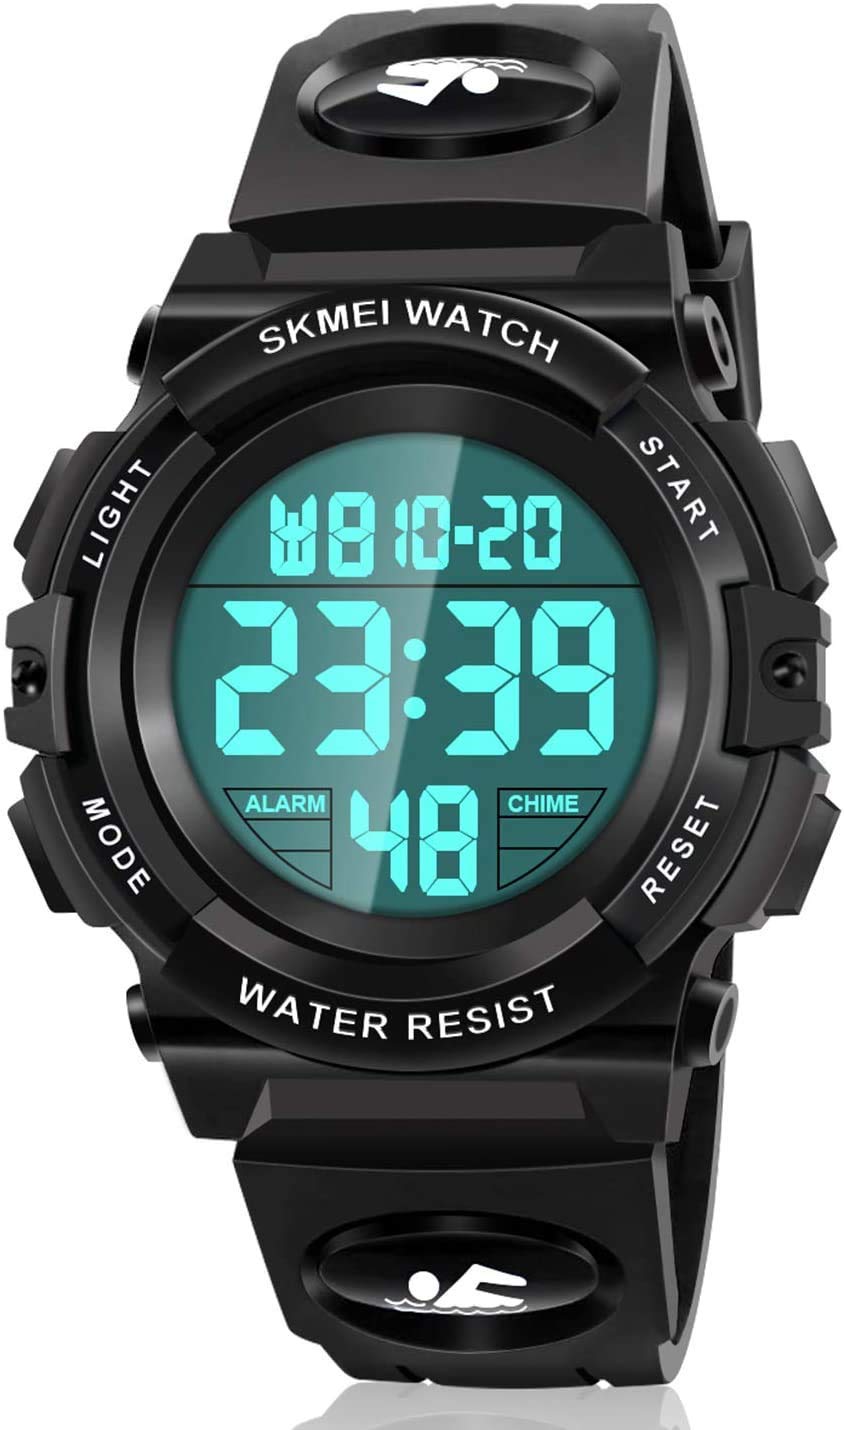 ATIMO LED 50M Waterproof Sports Digital Watch for Kids - Kids Gifts